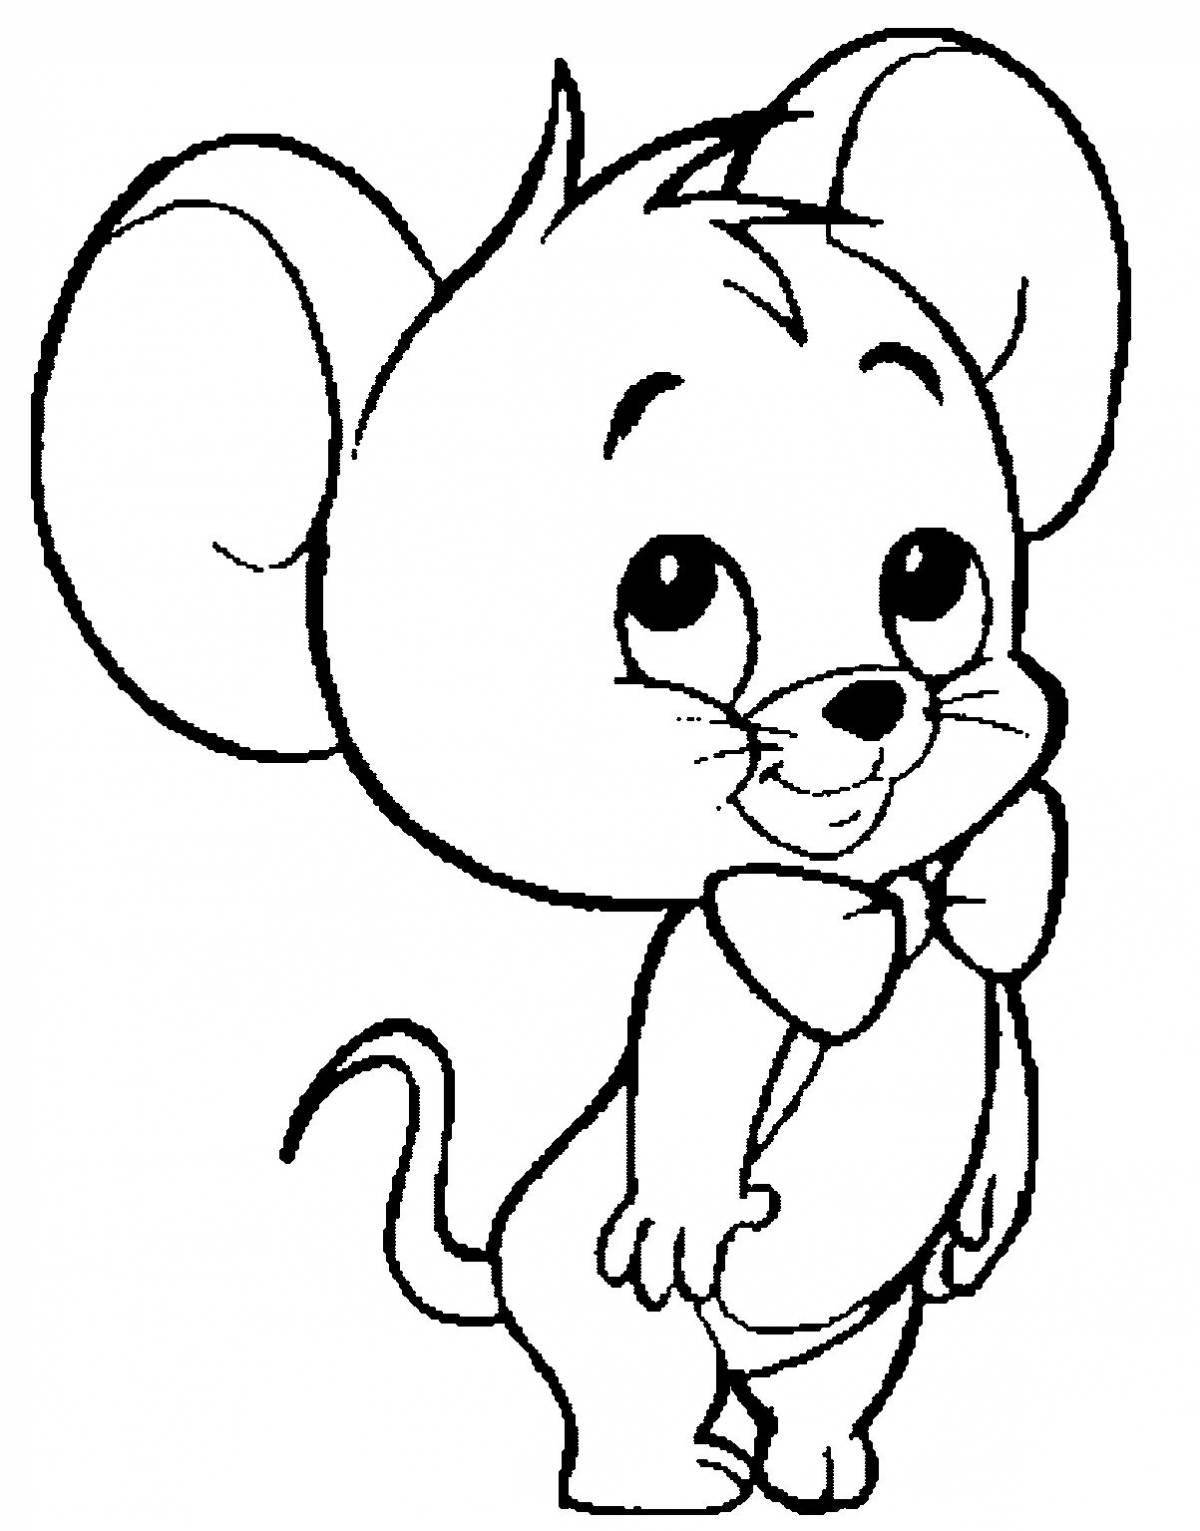 Coloring book joyful norushka mouse